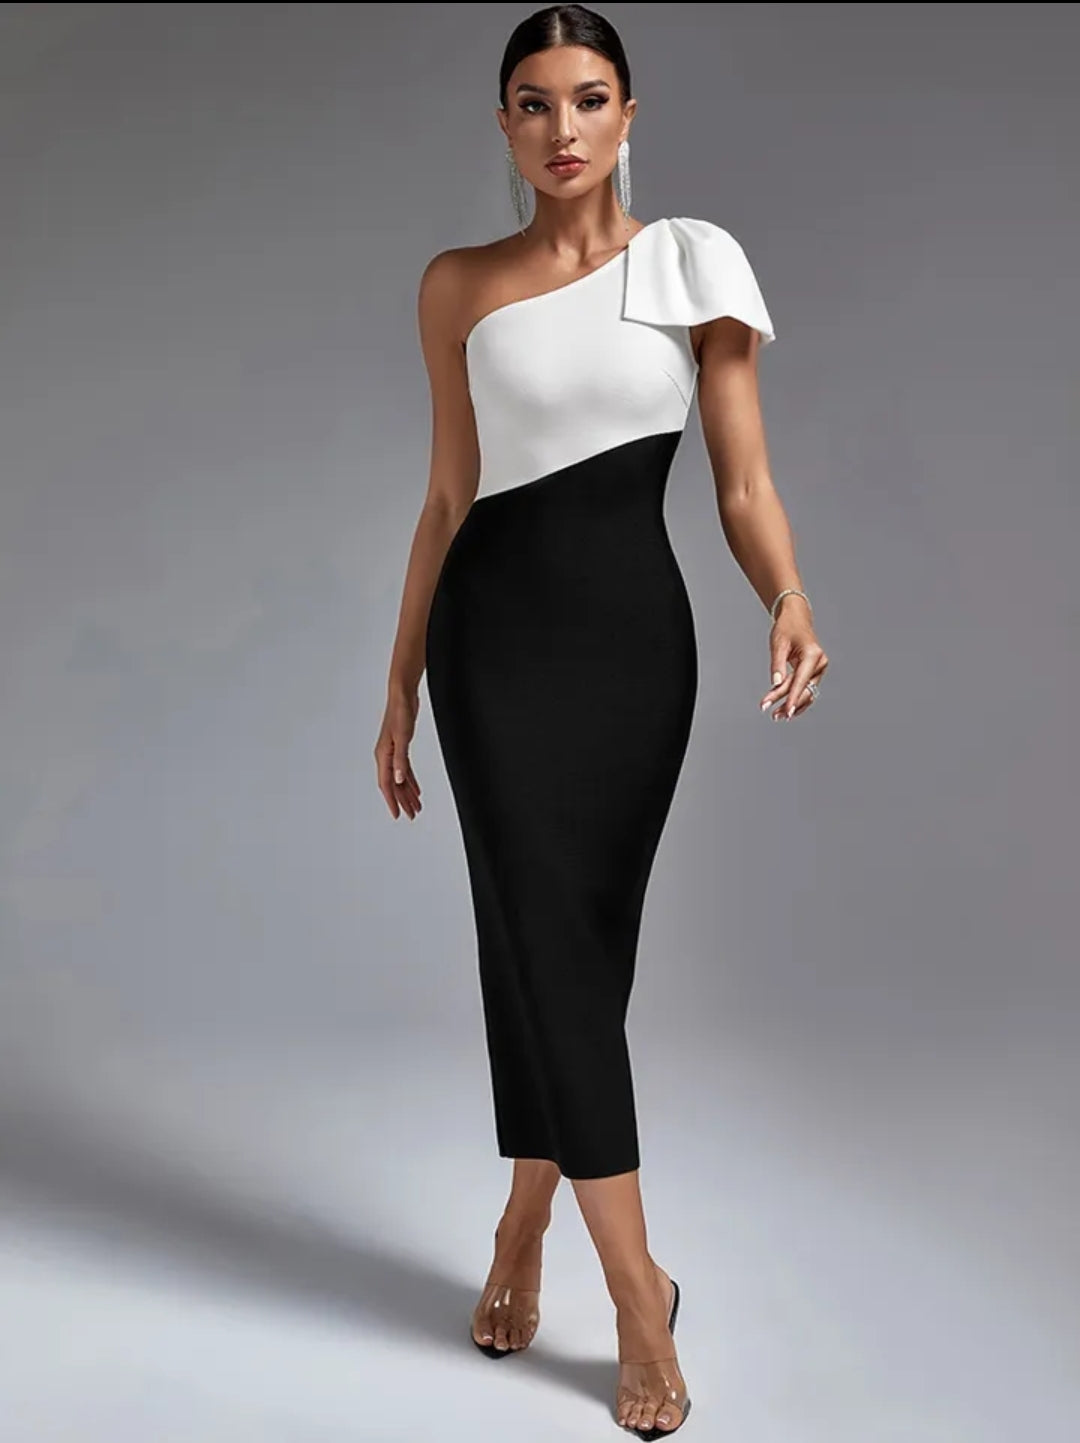 Classic Black & White Maxi Dress